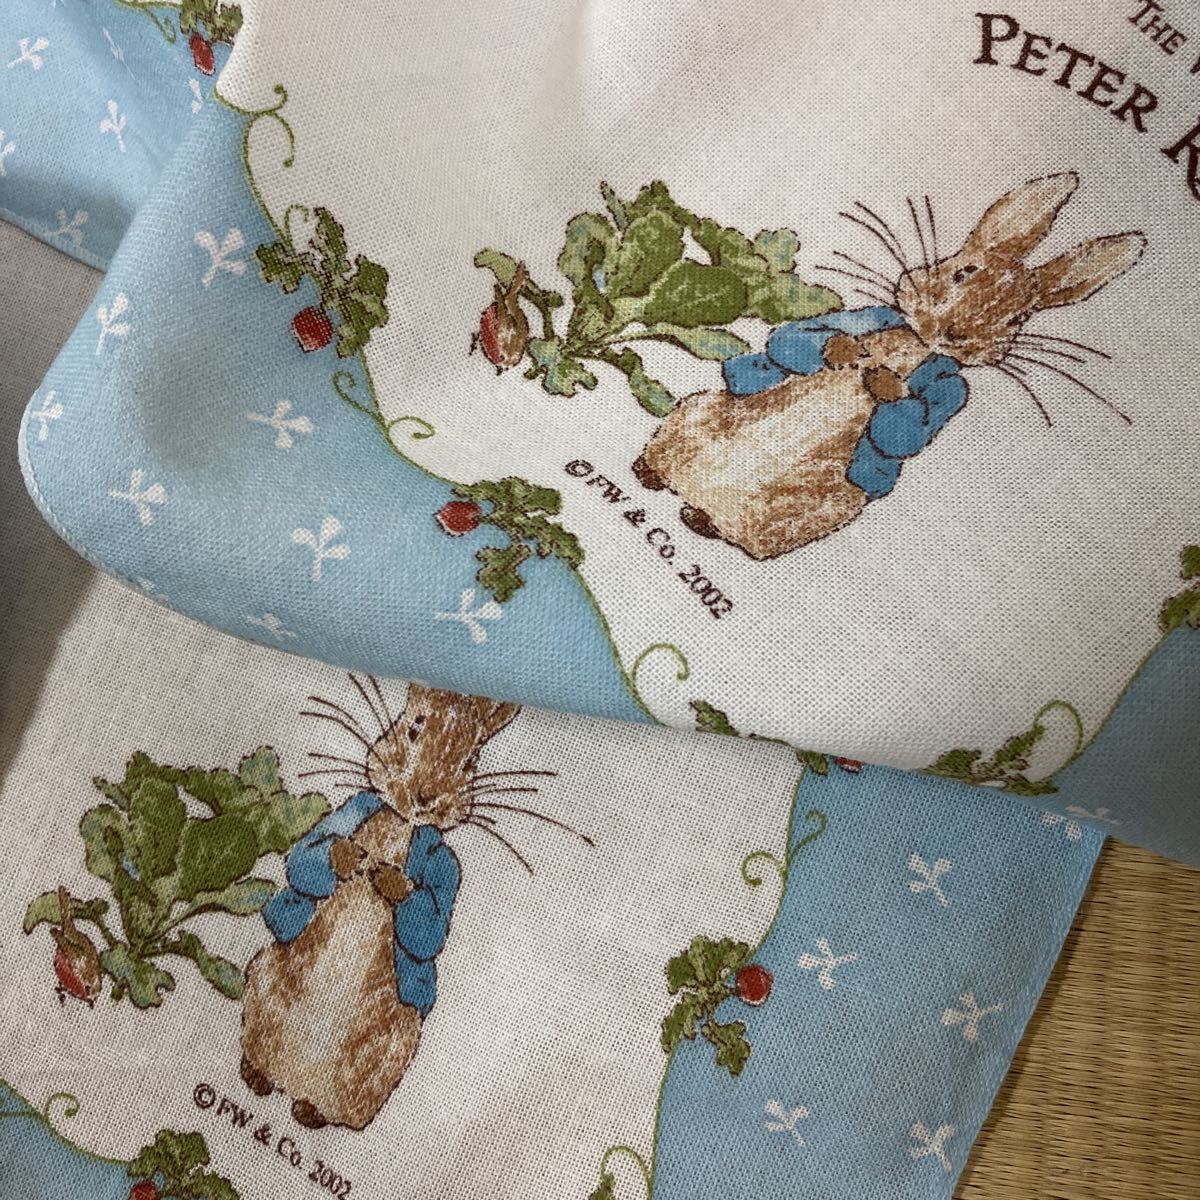  unused goods Peter Rabbit PETER RABBIT handkerchie naf gold pouch set glass inserting place mat pouch 